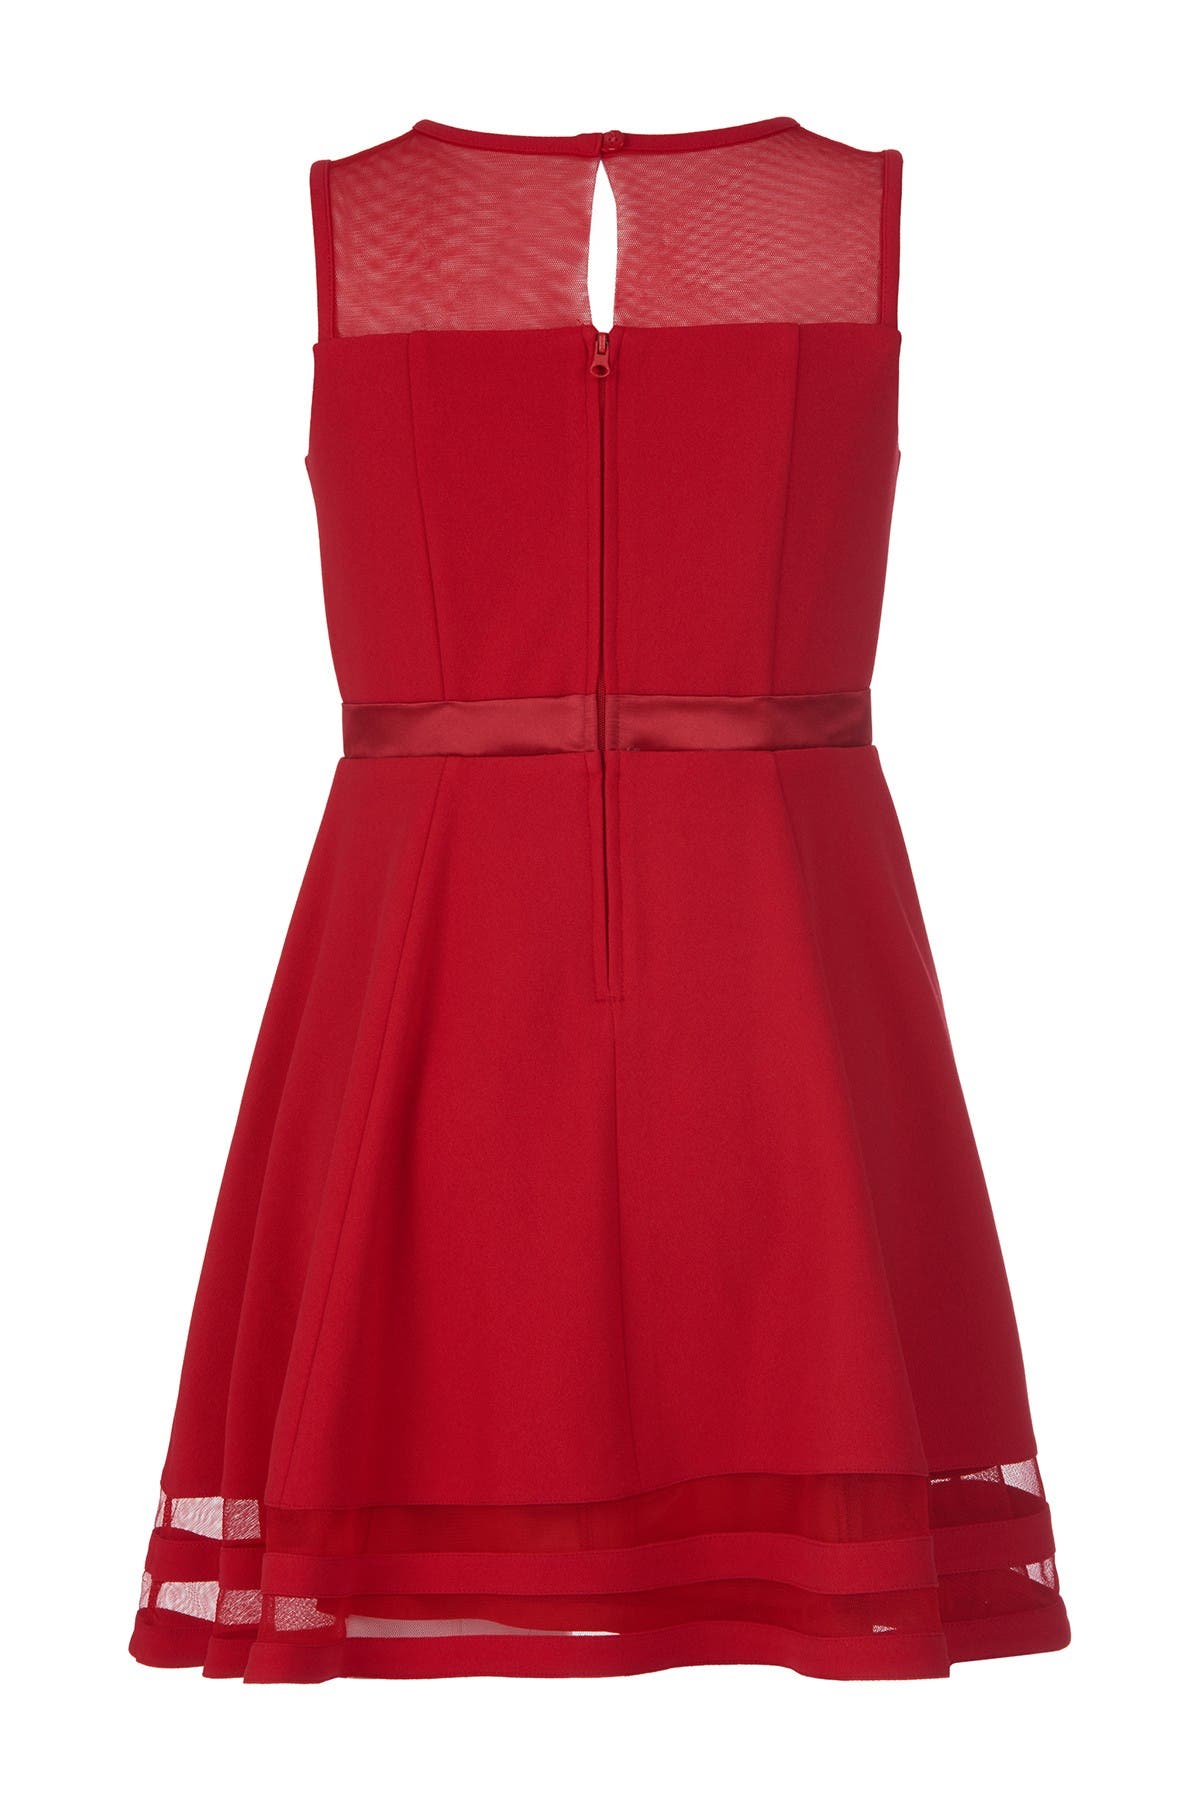 Calvin Klein Kids' Illusion Mesh Sleeveless Dress In Red